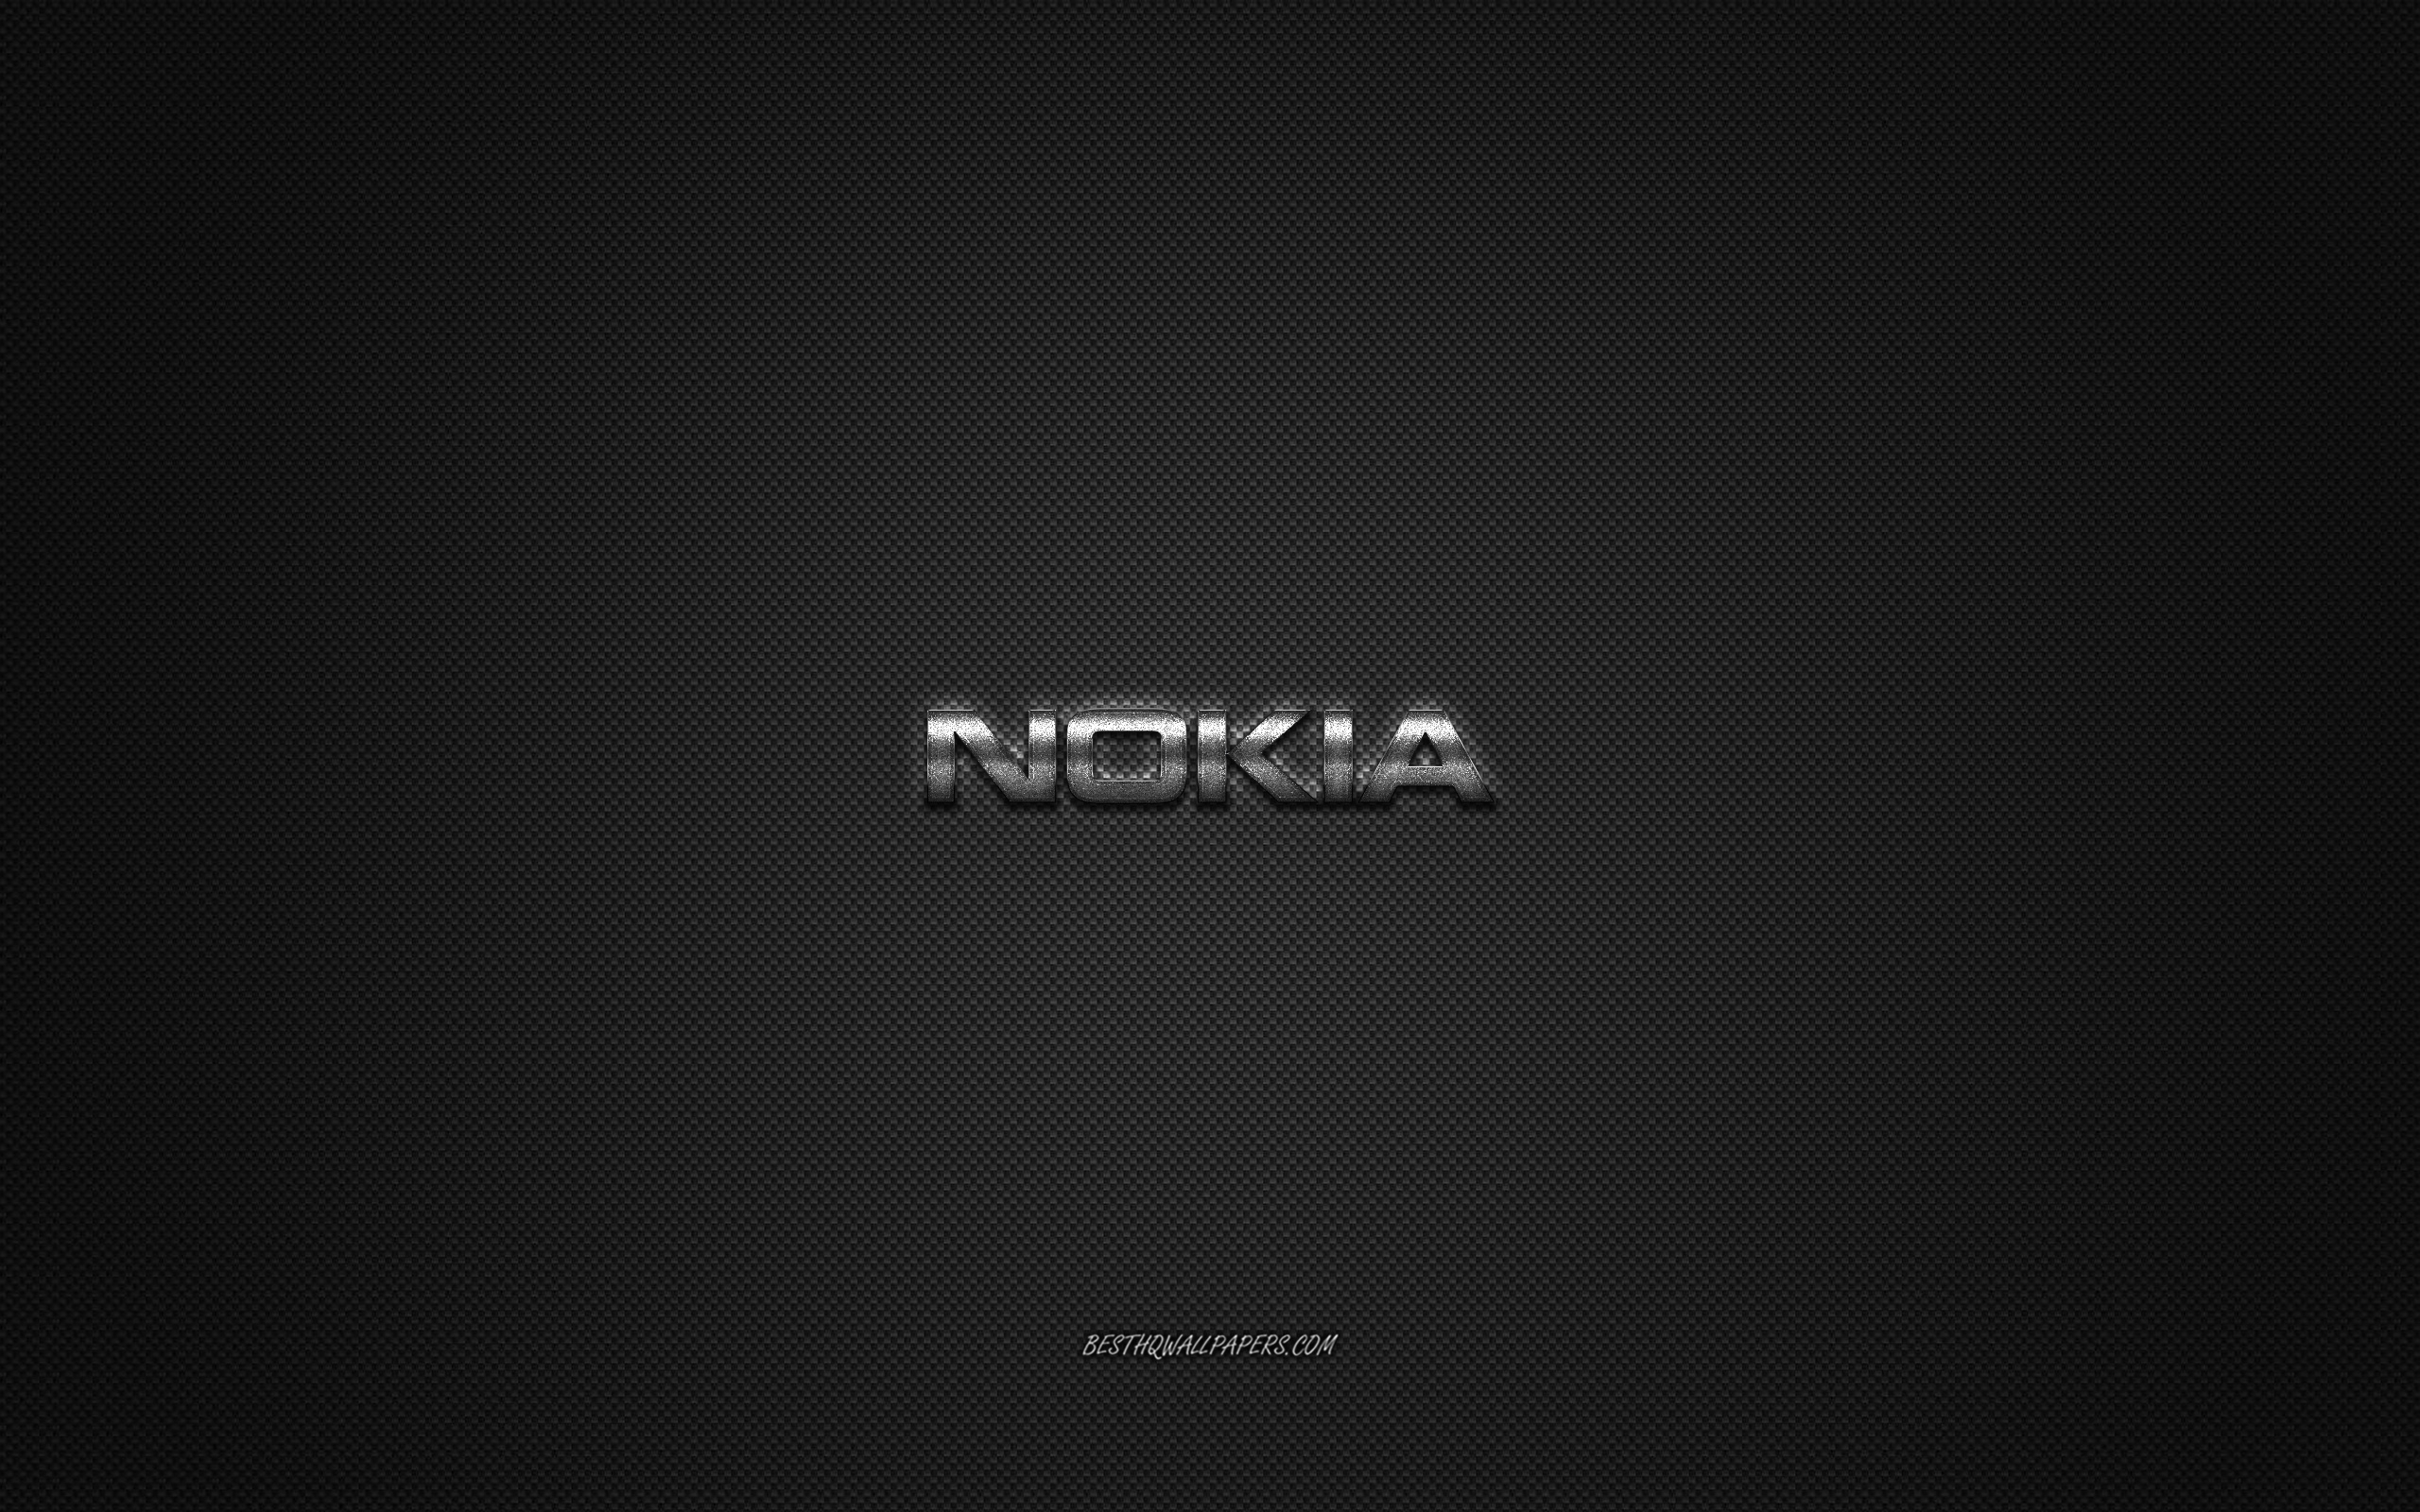 Download wallpaper Nokia logo, silver shiny logo, Nokia metal emblem, wallpaper for Nokia smartphones, gray carbon fiber texture, Nokia, brands, creative art for desktop with resolution 2560x1600. High Quality HD picture wallpaper